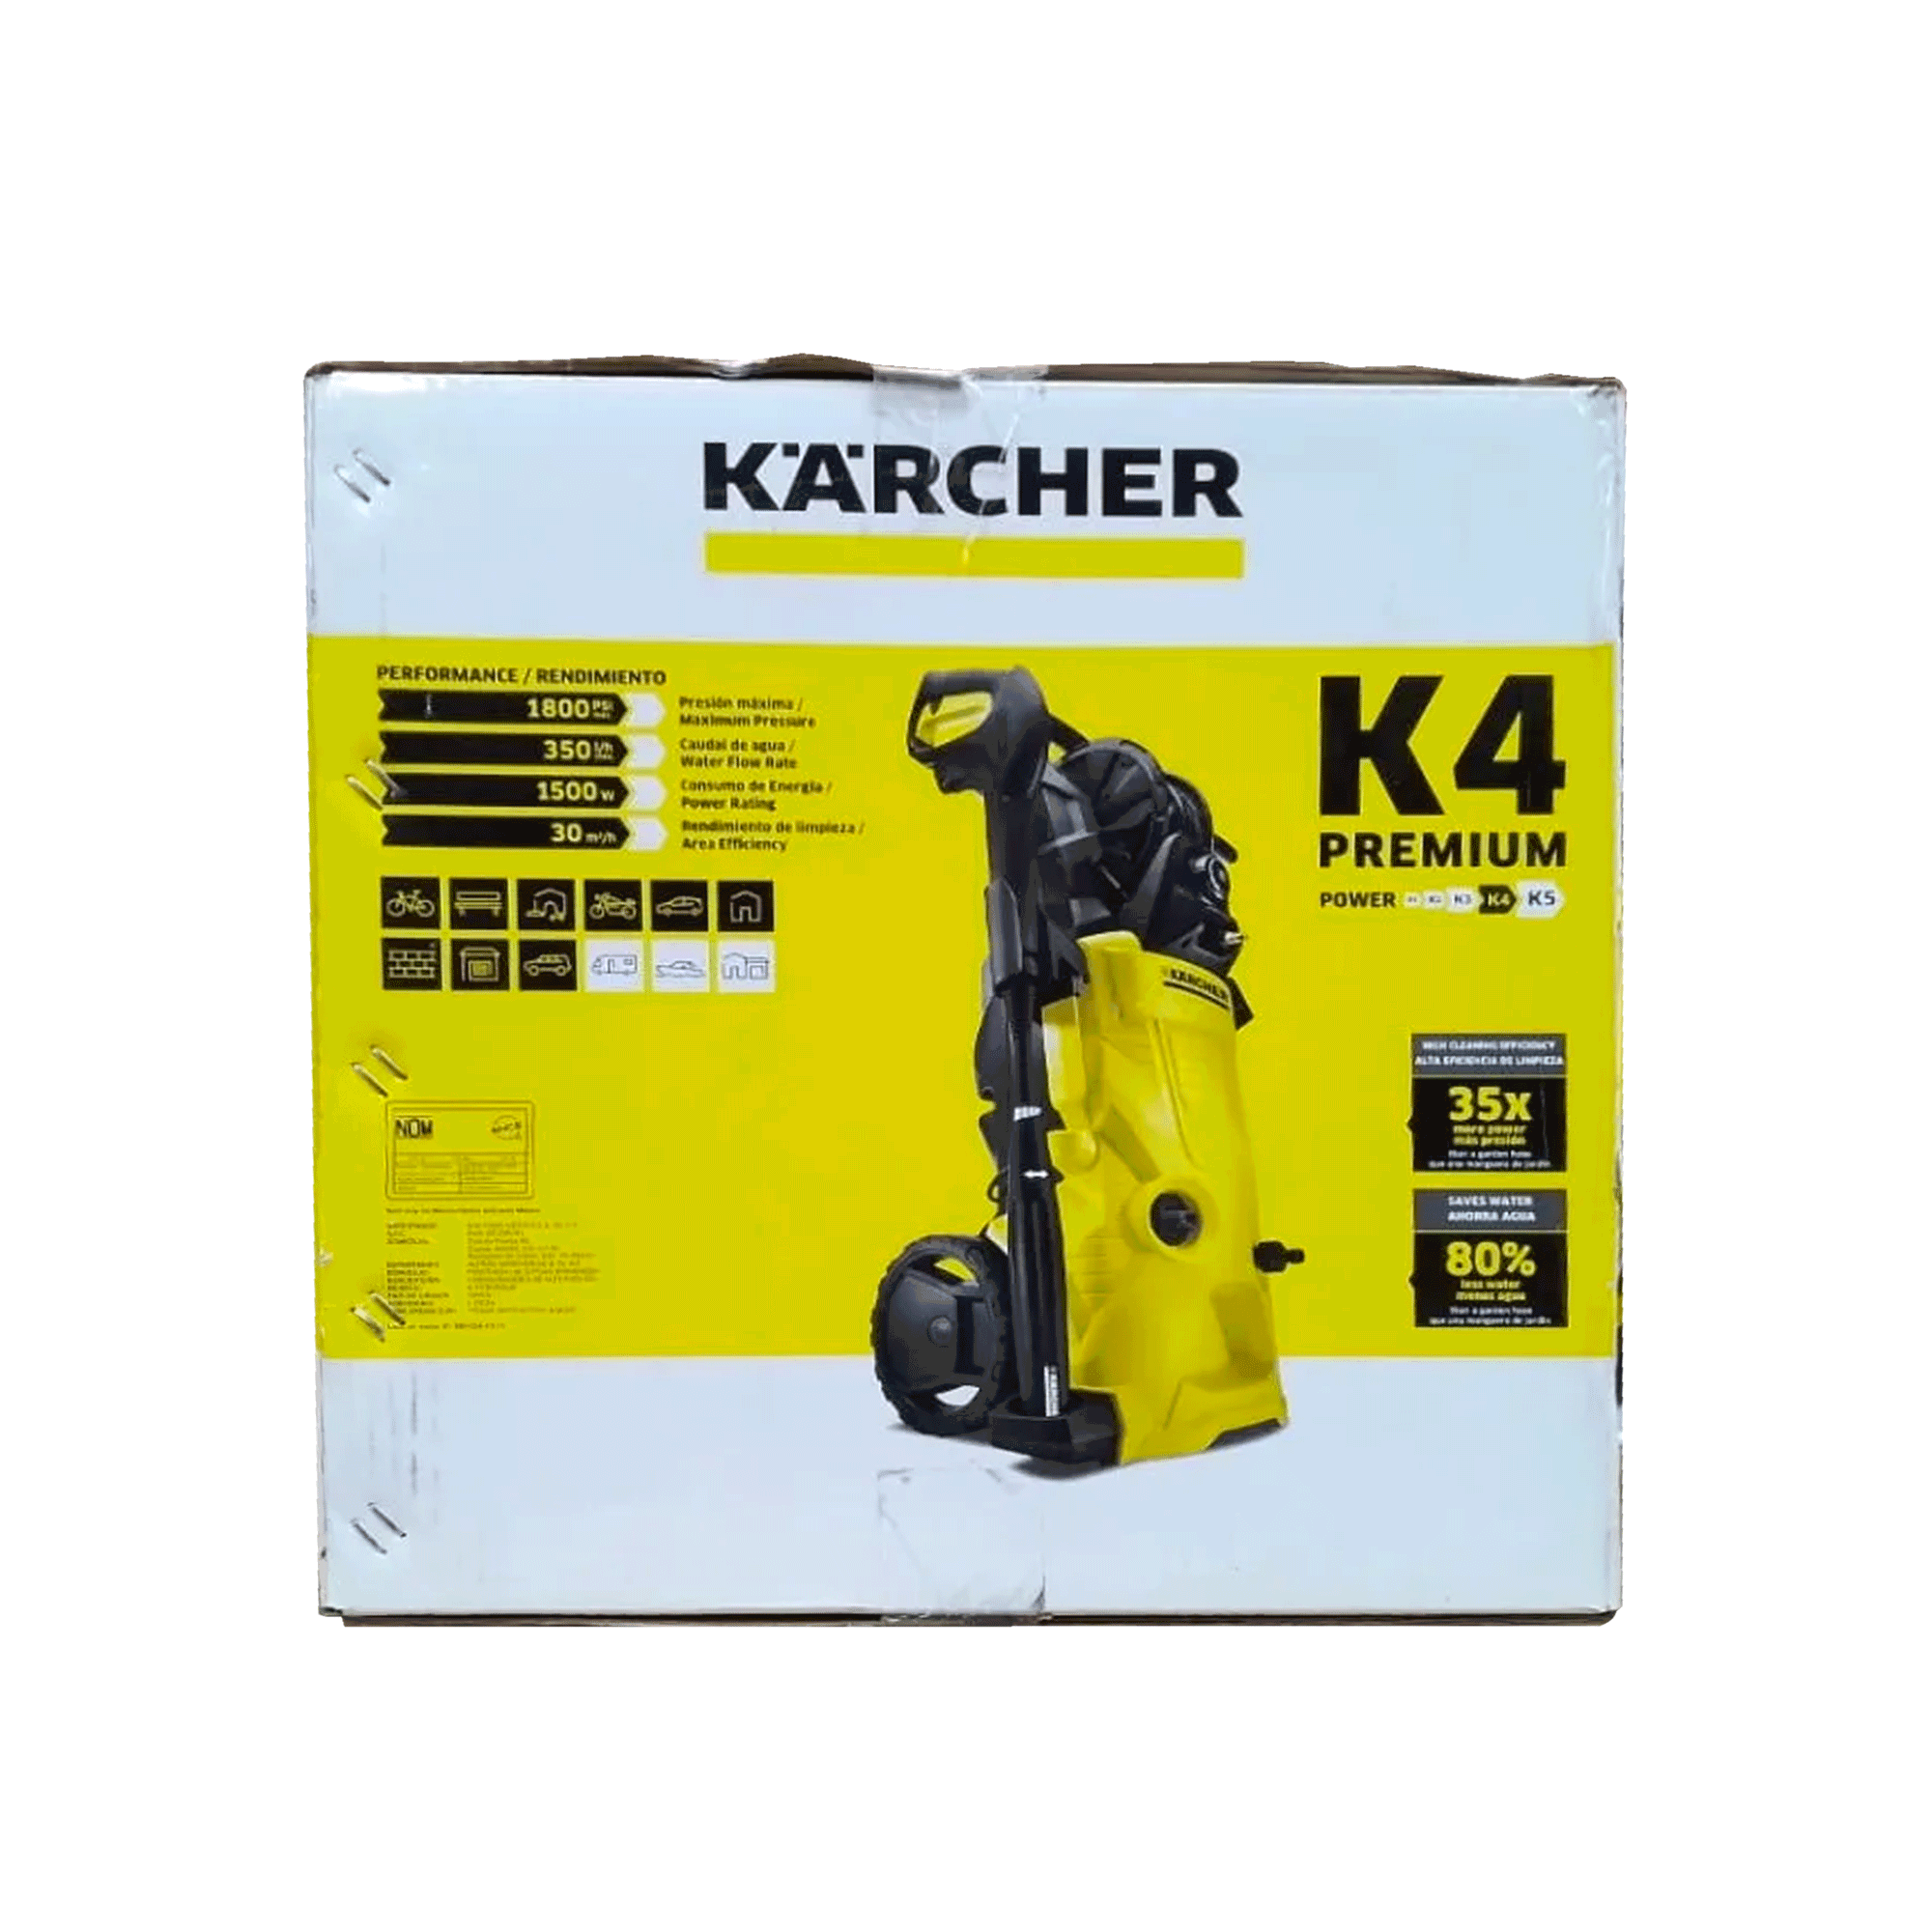 Hidrolimpiadora Karcher K4 Premium Power Cont en Oferta